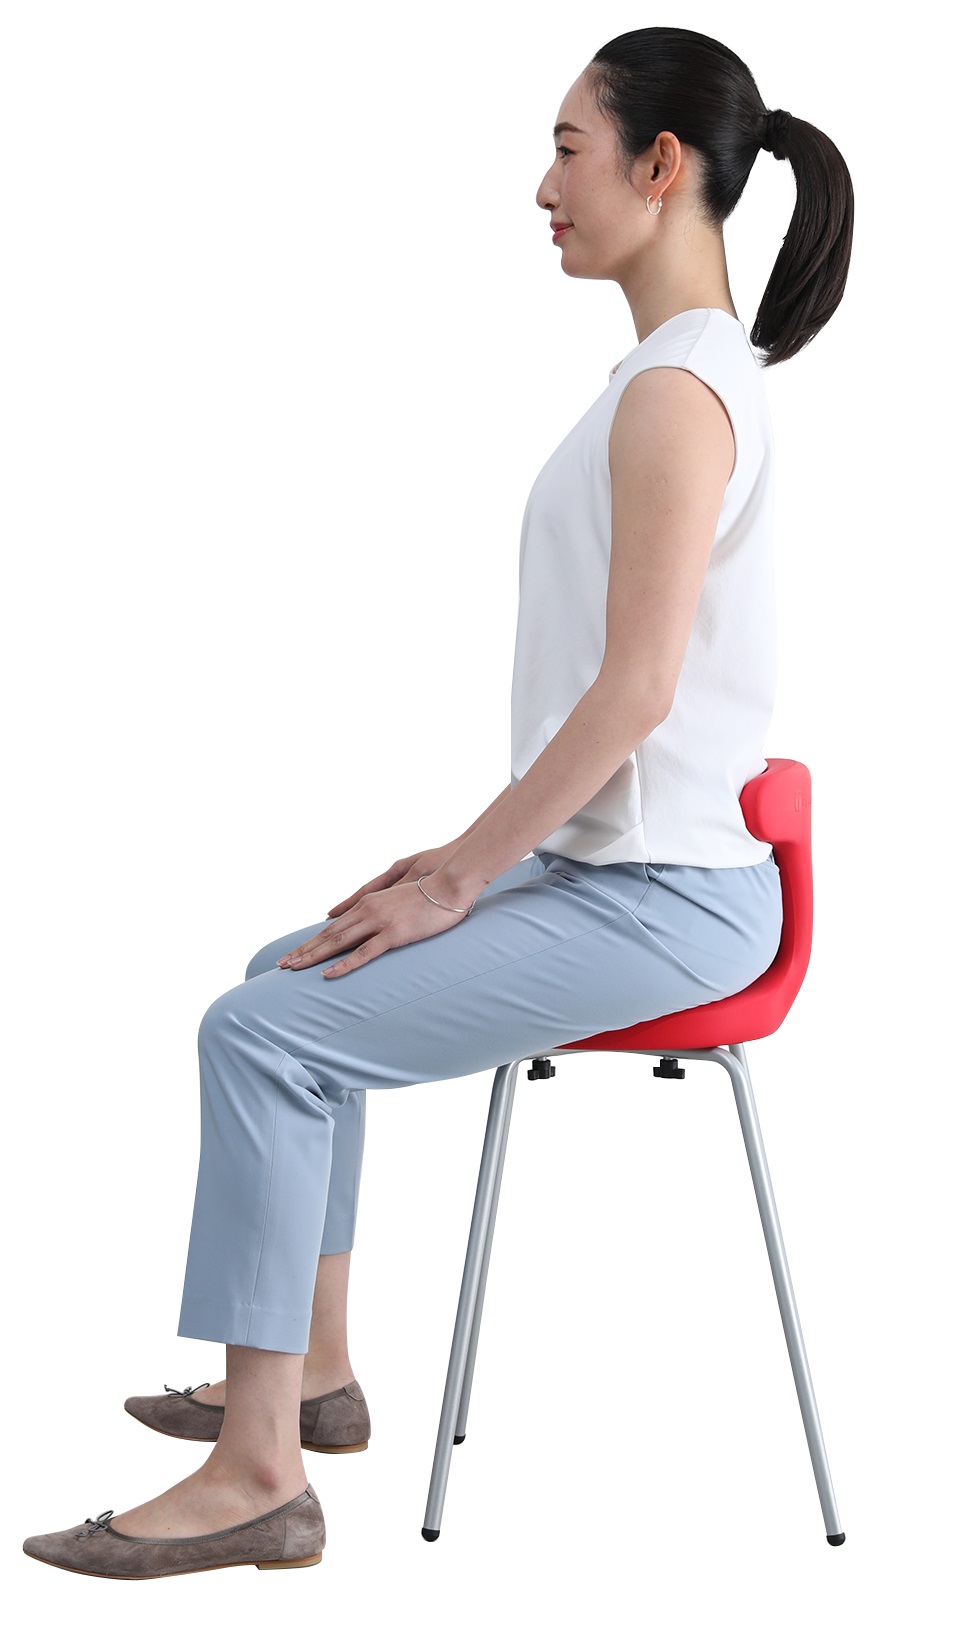 ayur-chair stool S RED | ayur-chair Japan Co.,Ltd